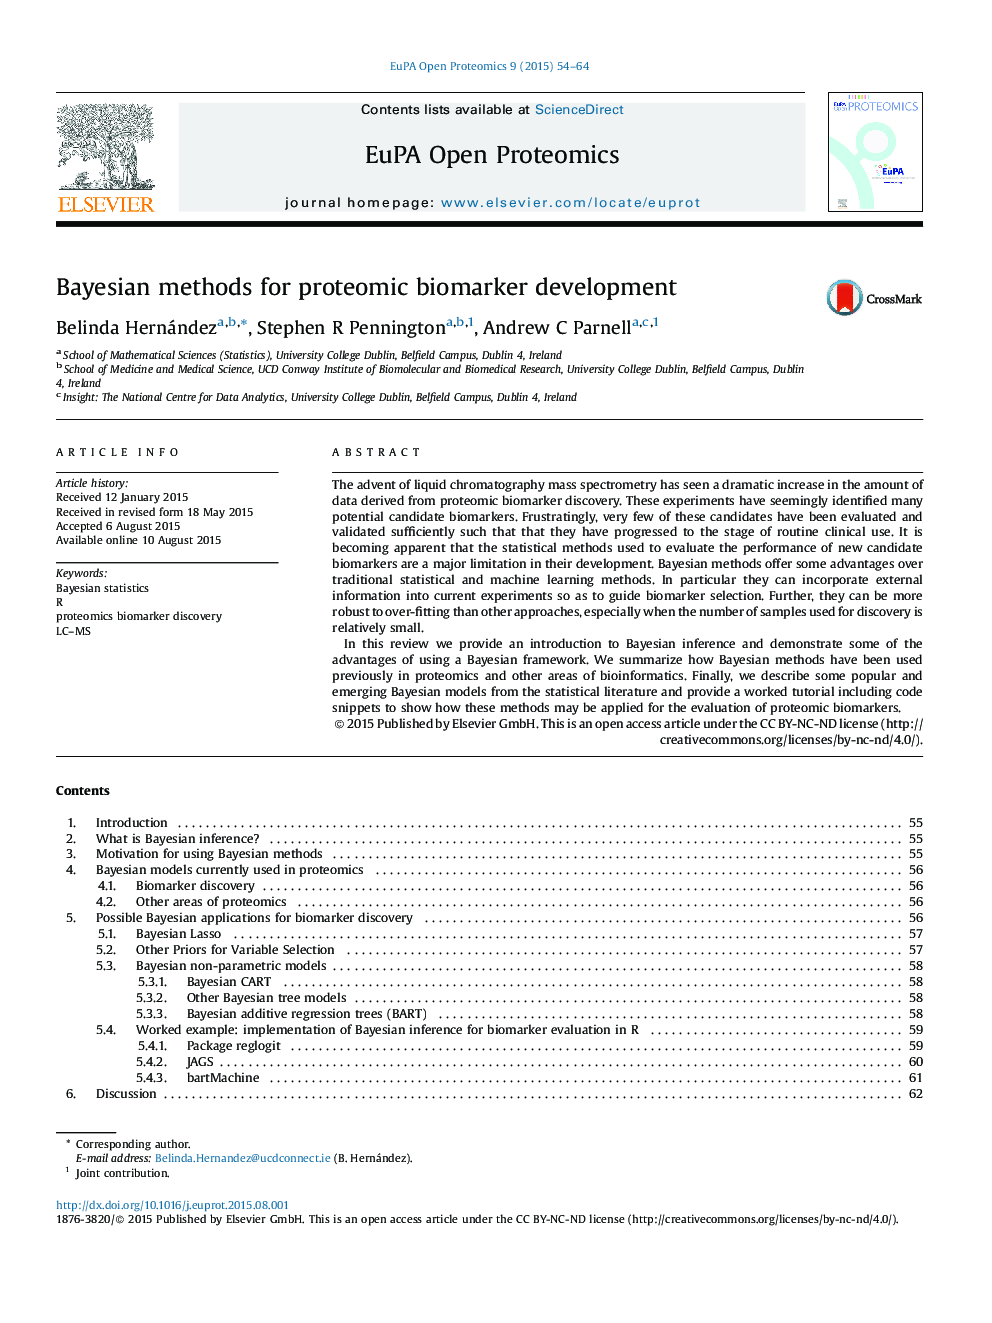 Bayesian methods for proteomic biomarker development